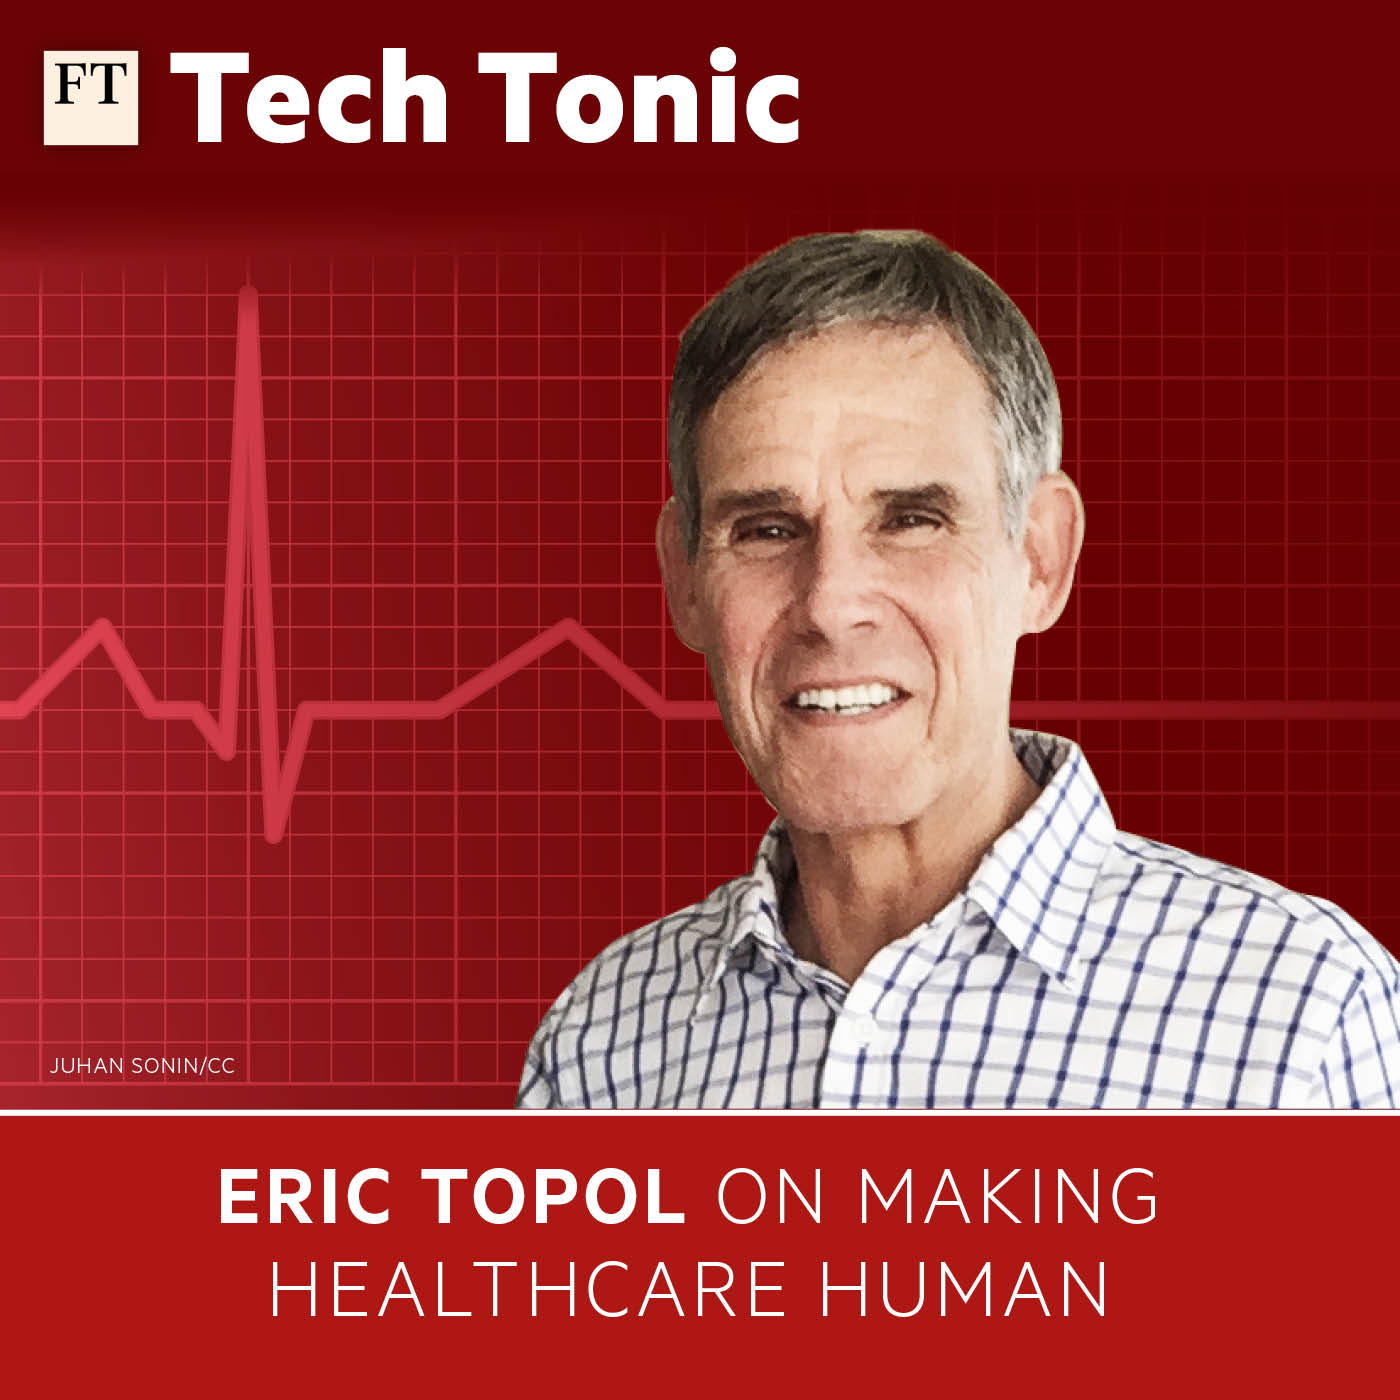 Eric Topol on making healthcare more human